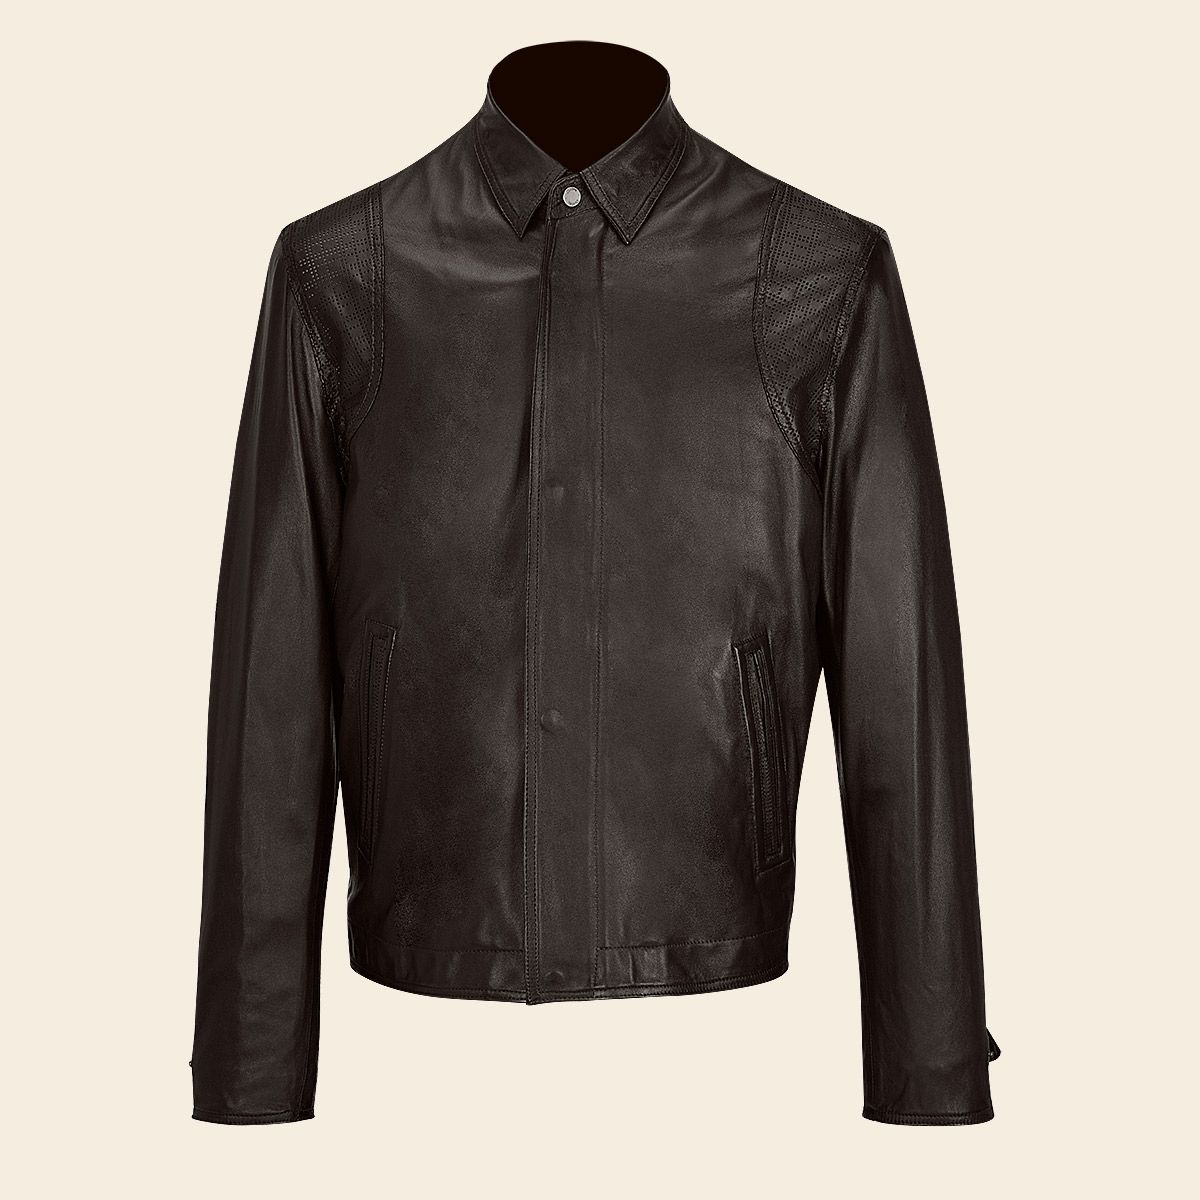 H328COC - Cuadra black dress casual fashion blouson leather jacket for men-Kuet.us